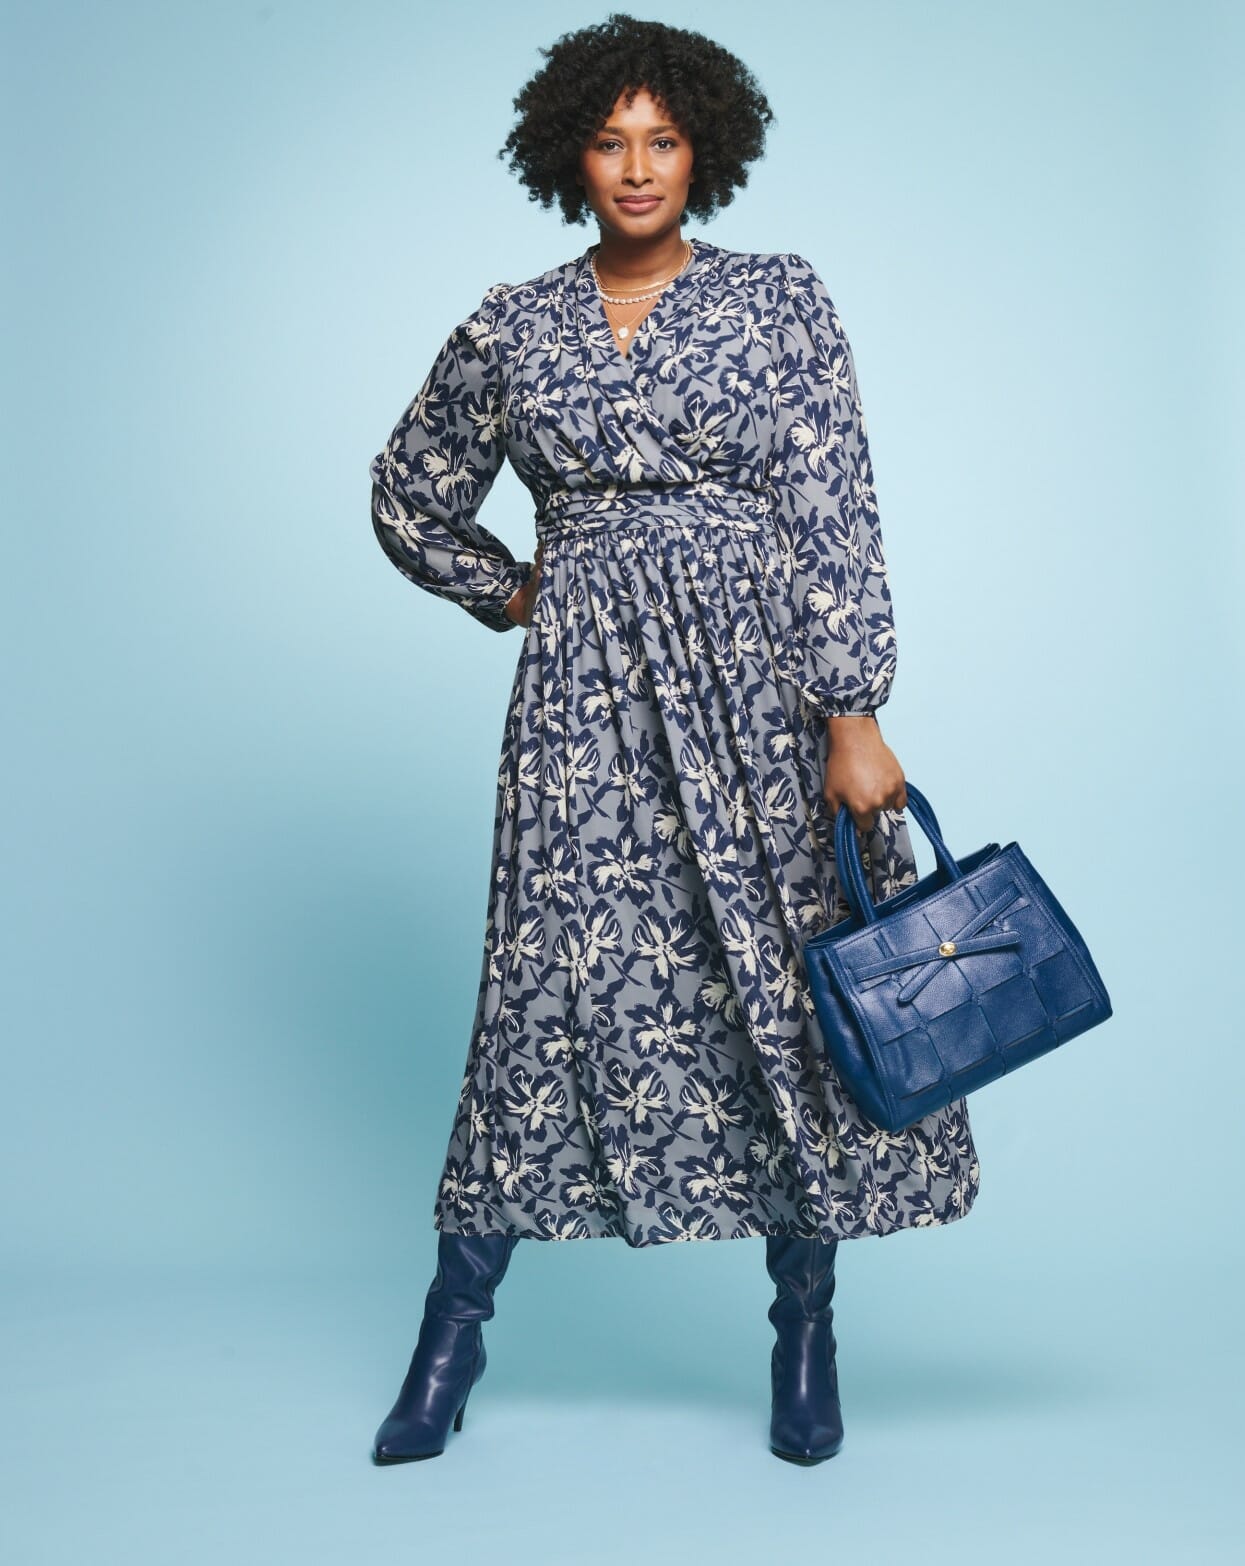 plus-size model wearing a blue printed dress